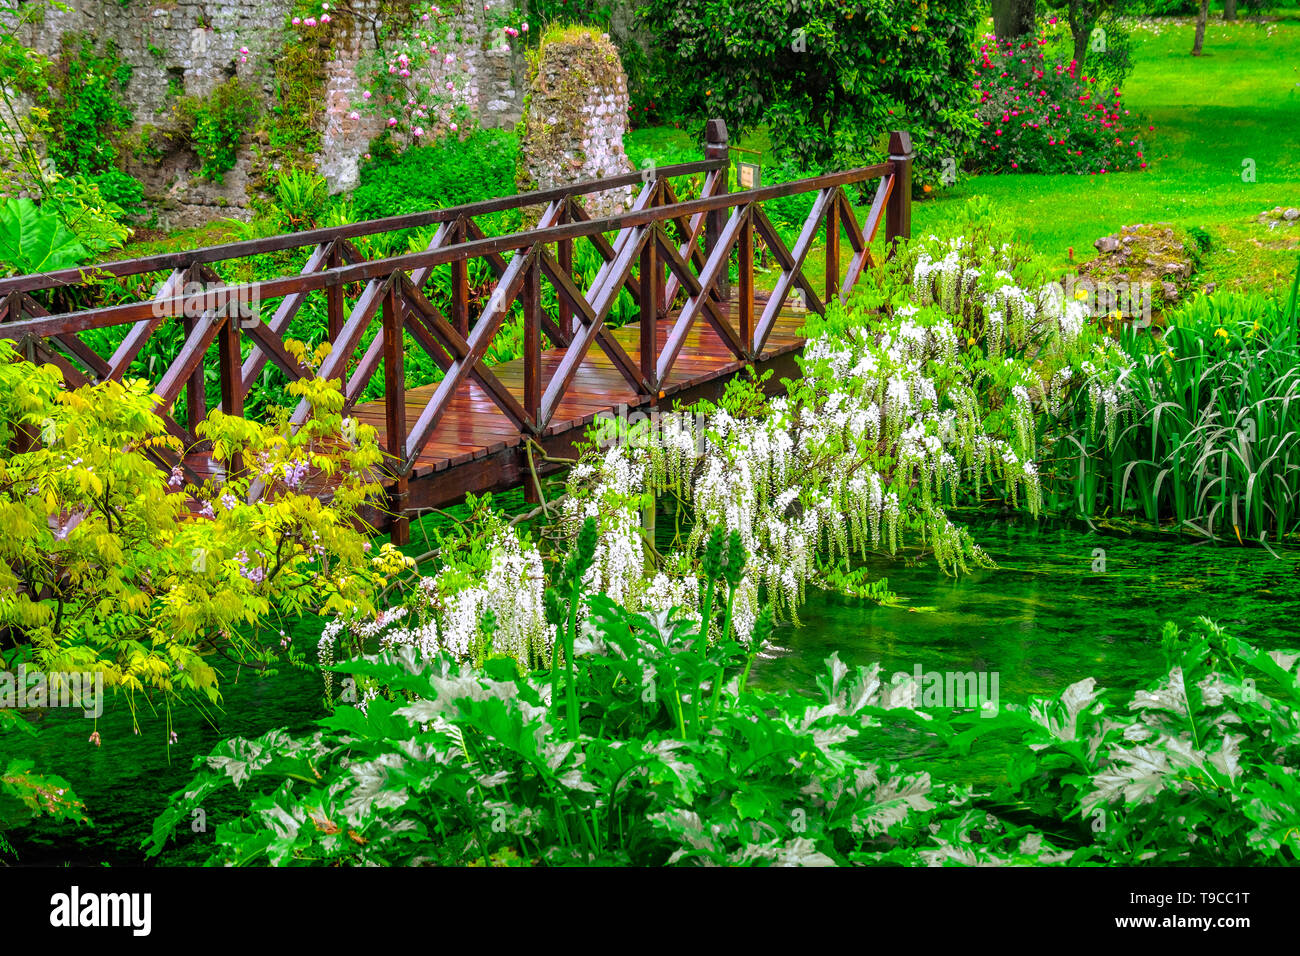 fairy tale bridge vivid green river wooden full of flowers in ornamental garden Stock Photo